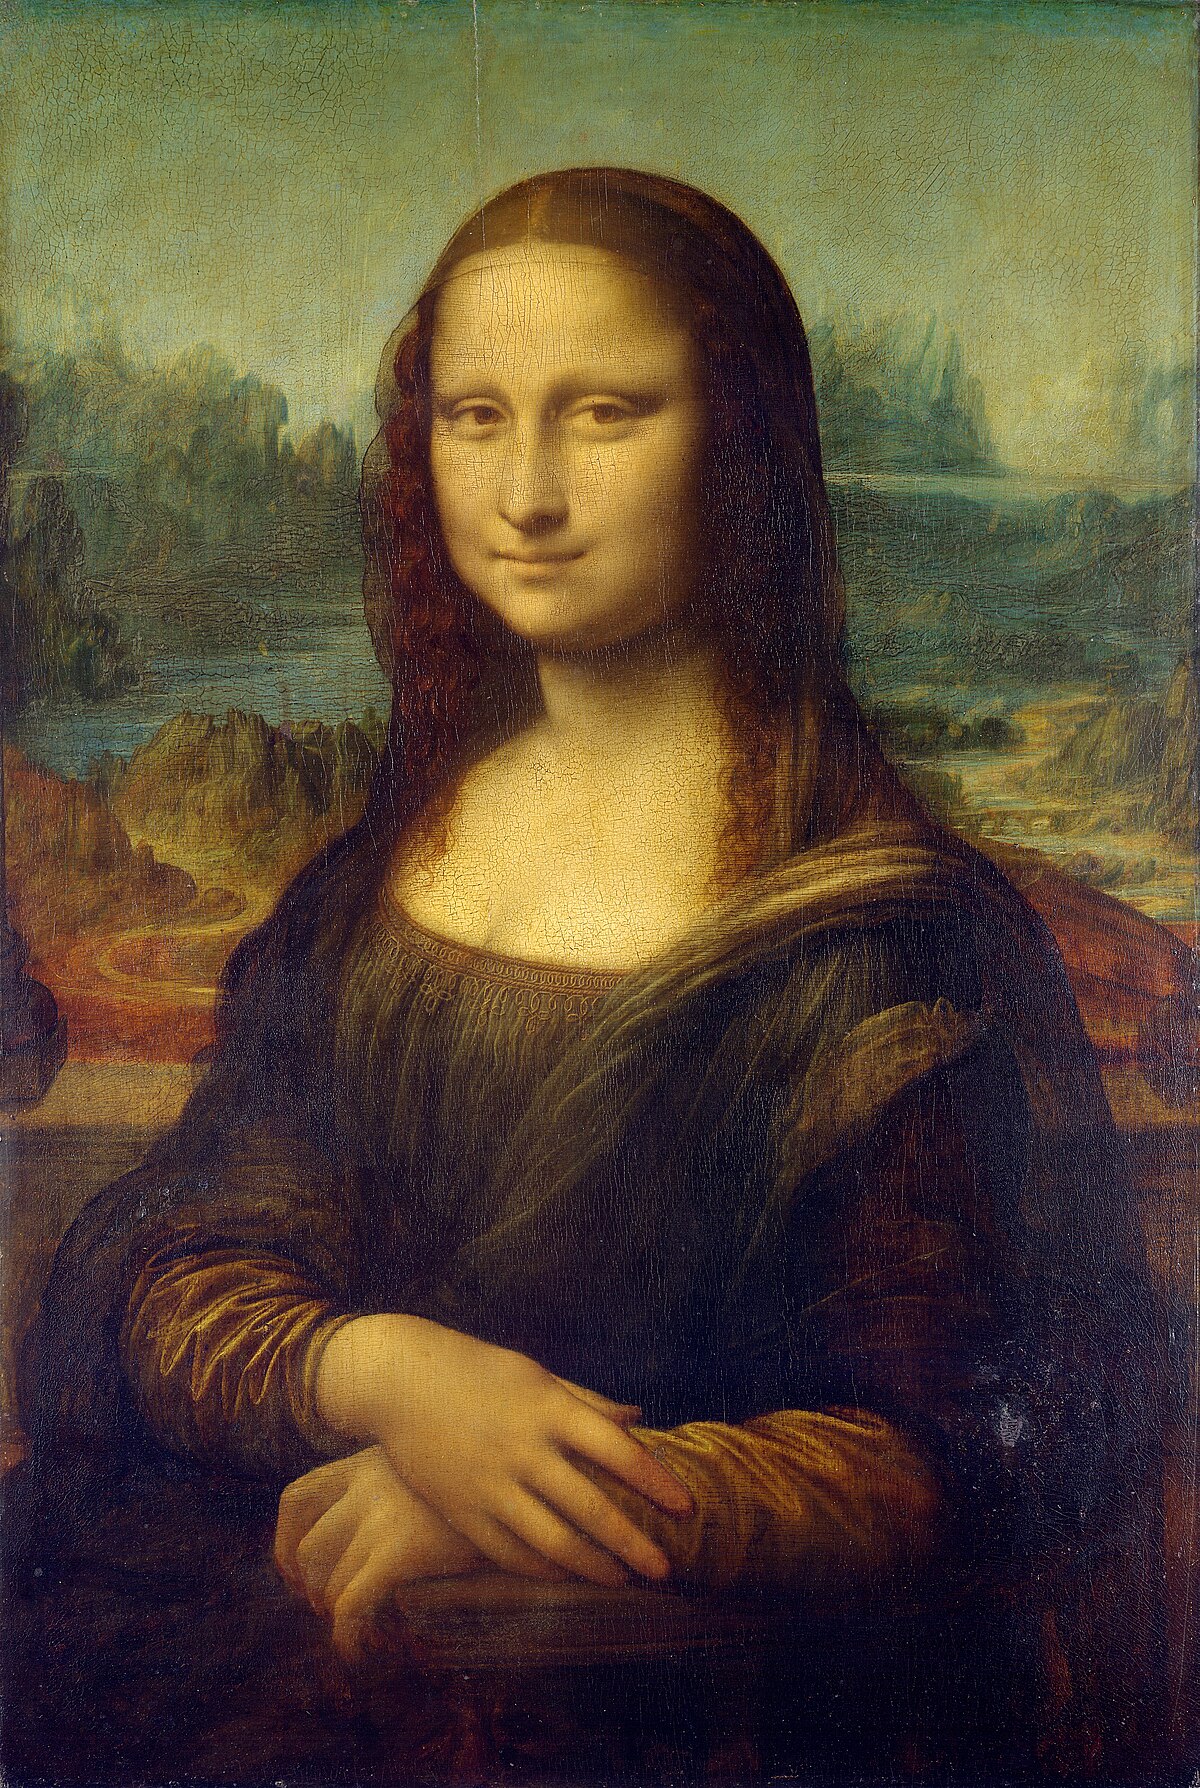 High Quality Mona lisa Blank Meme Template